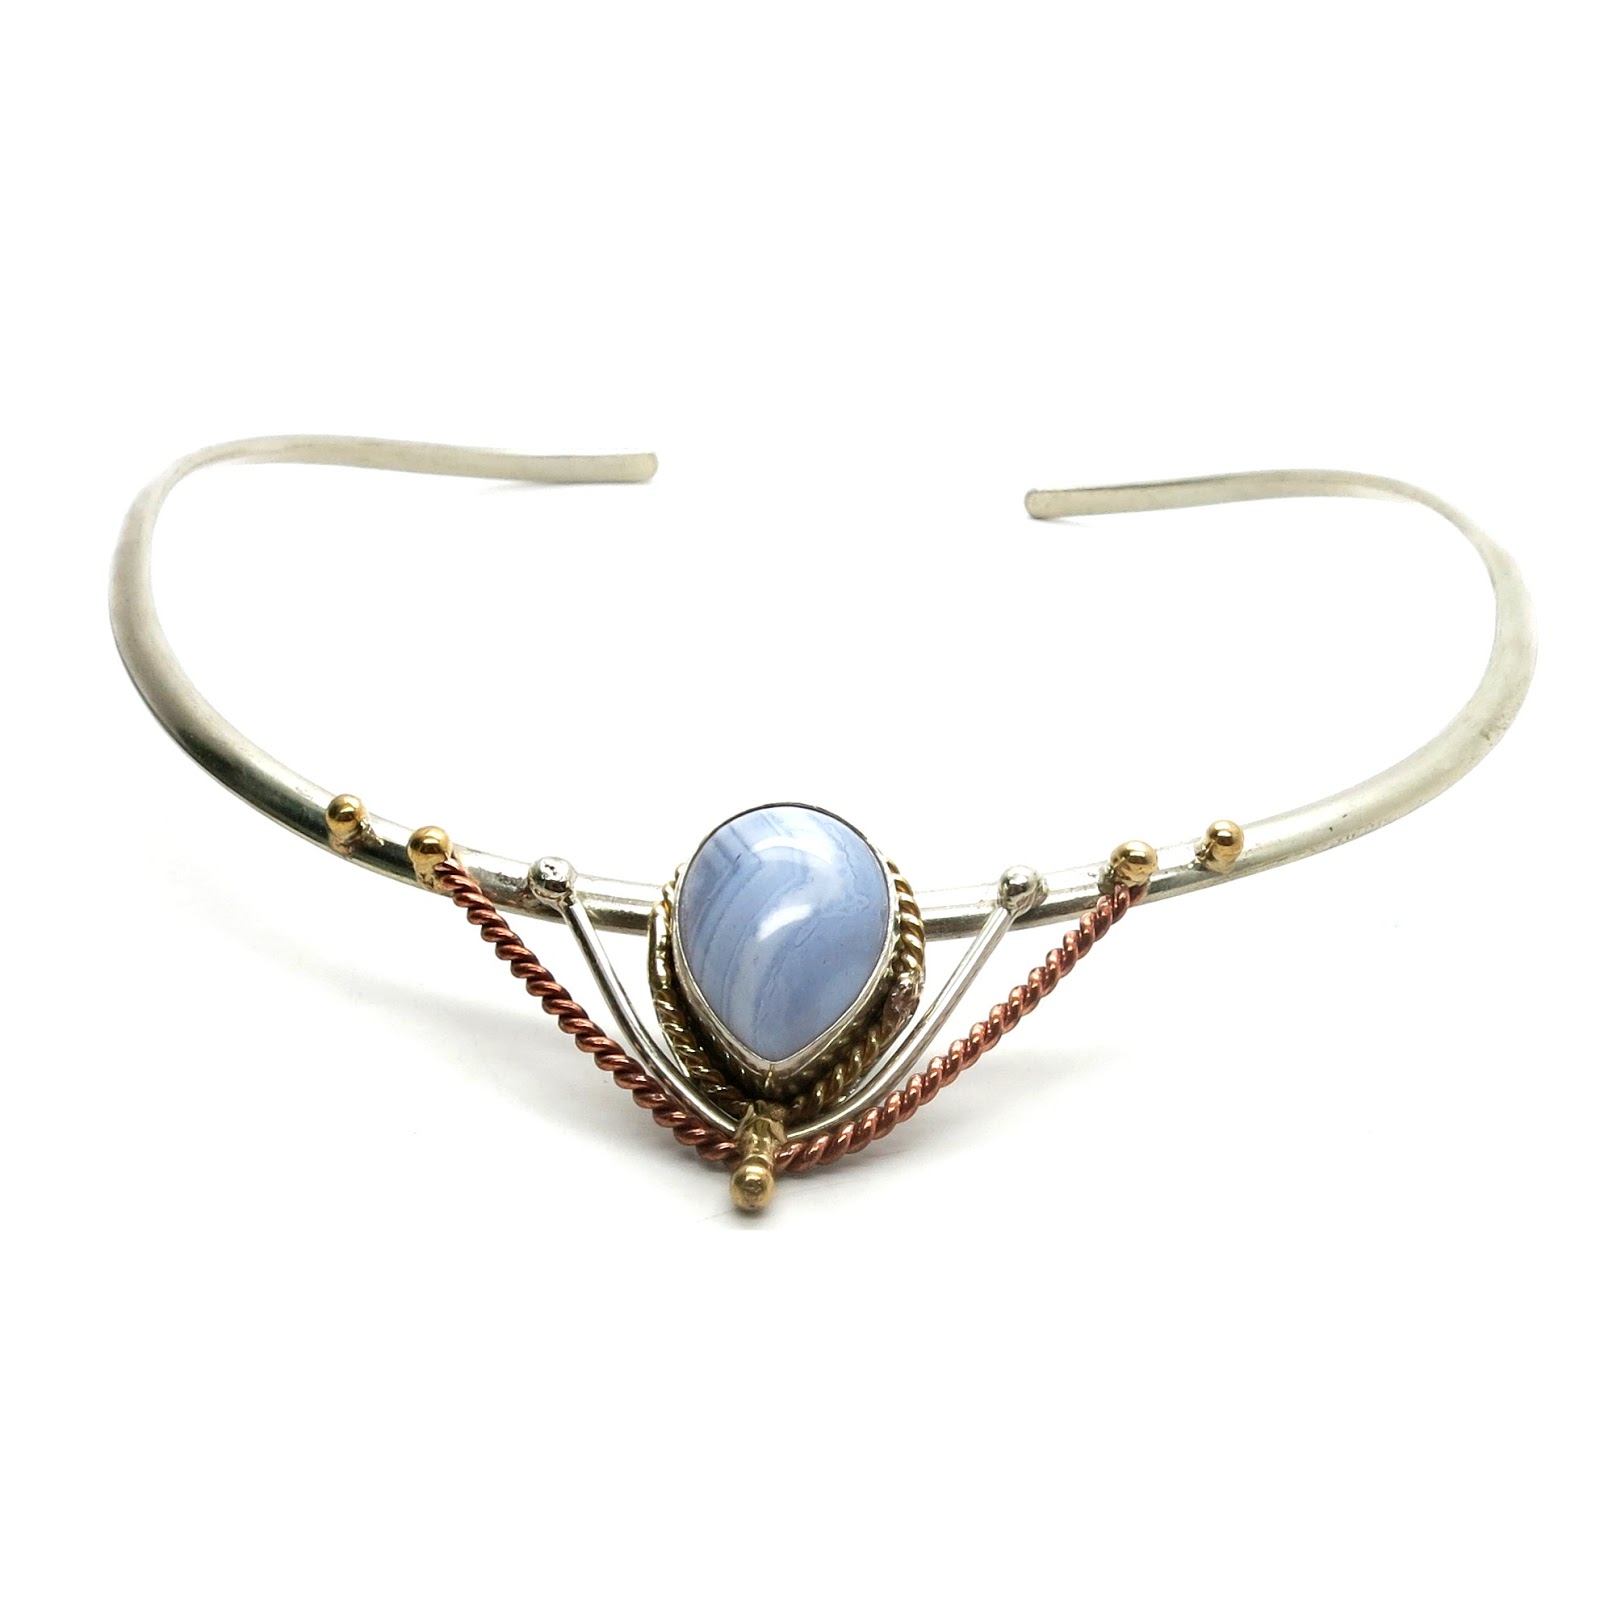 I Dig Crystals Blog: Royal Metal Gemstone Collars